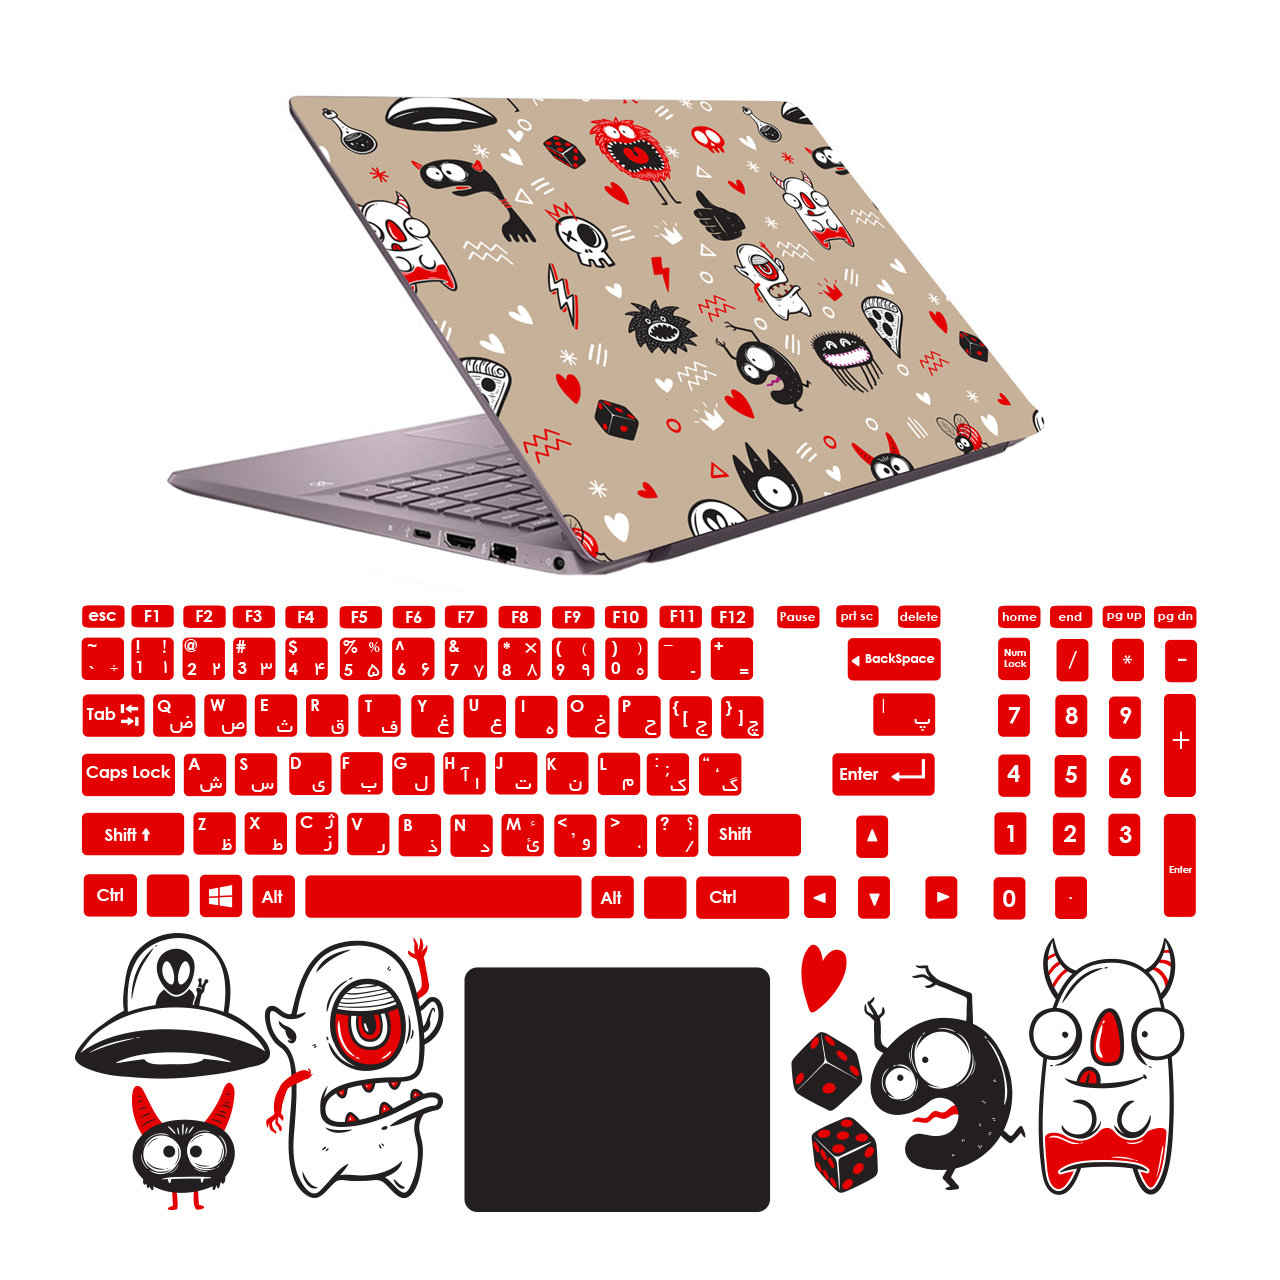 استیکر لپ تاپ صالسو آرت مدل 5094 hk به همراه برچسب حروف فارسی کیبورد